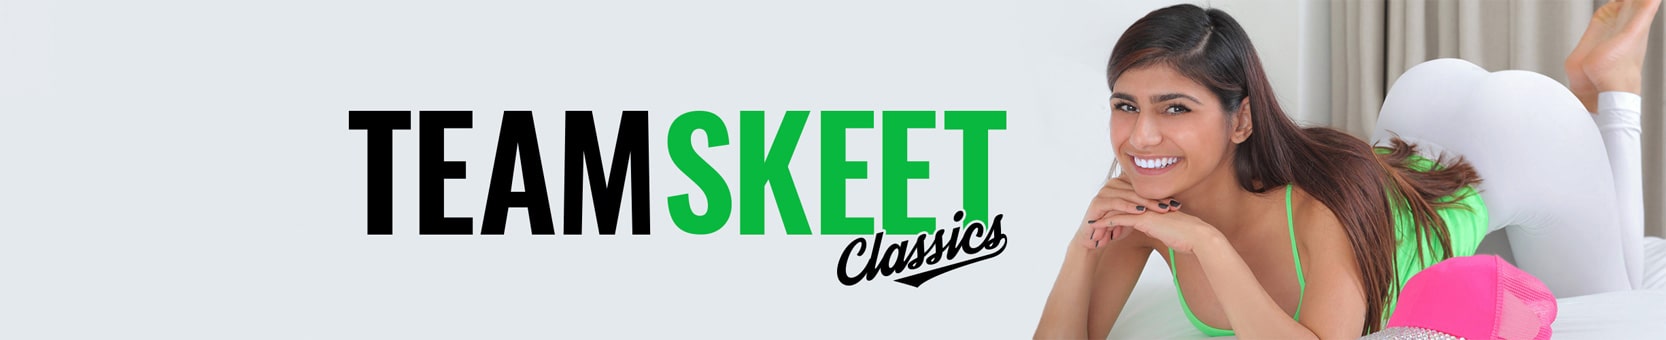 Team Skeet Classics bedava videolar